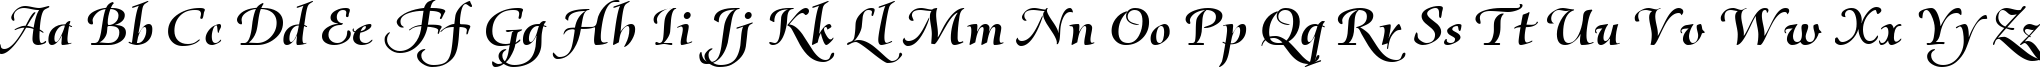 Пример написания английского алфавита шрифтом Olietta script BoldItalic